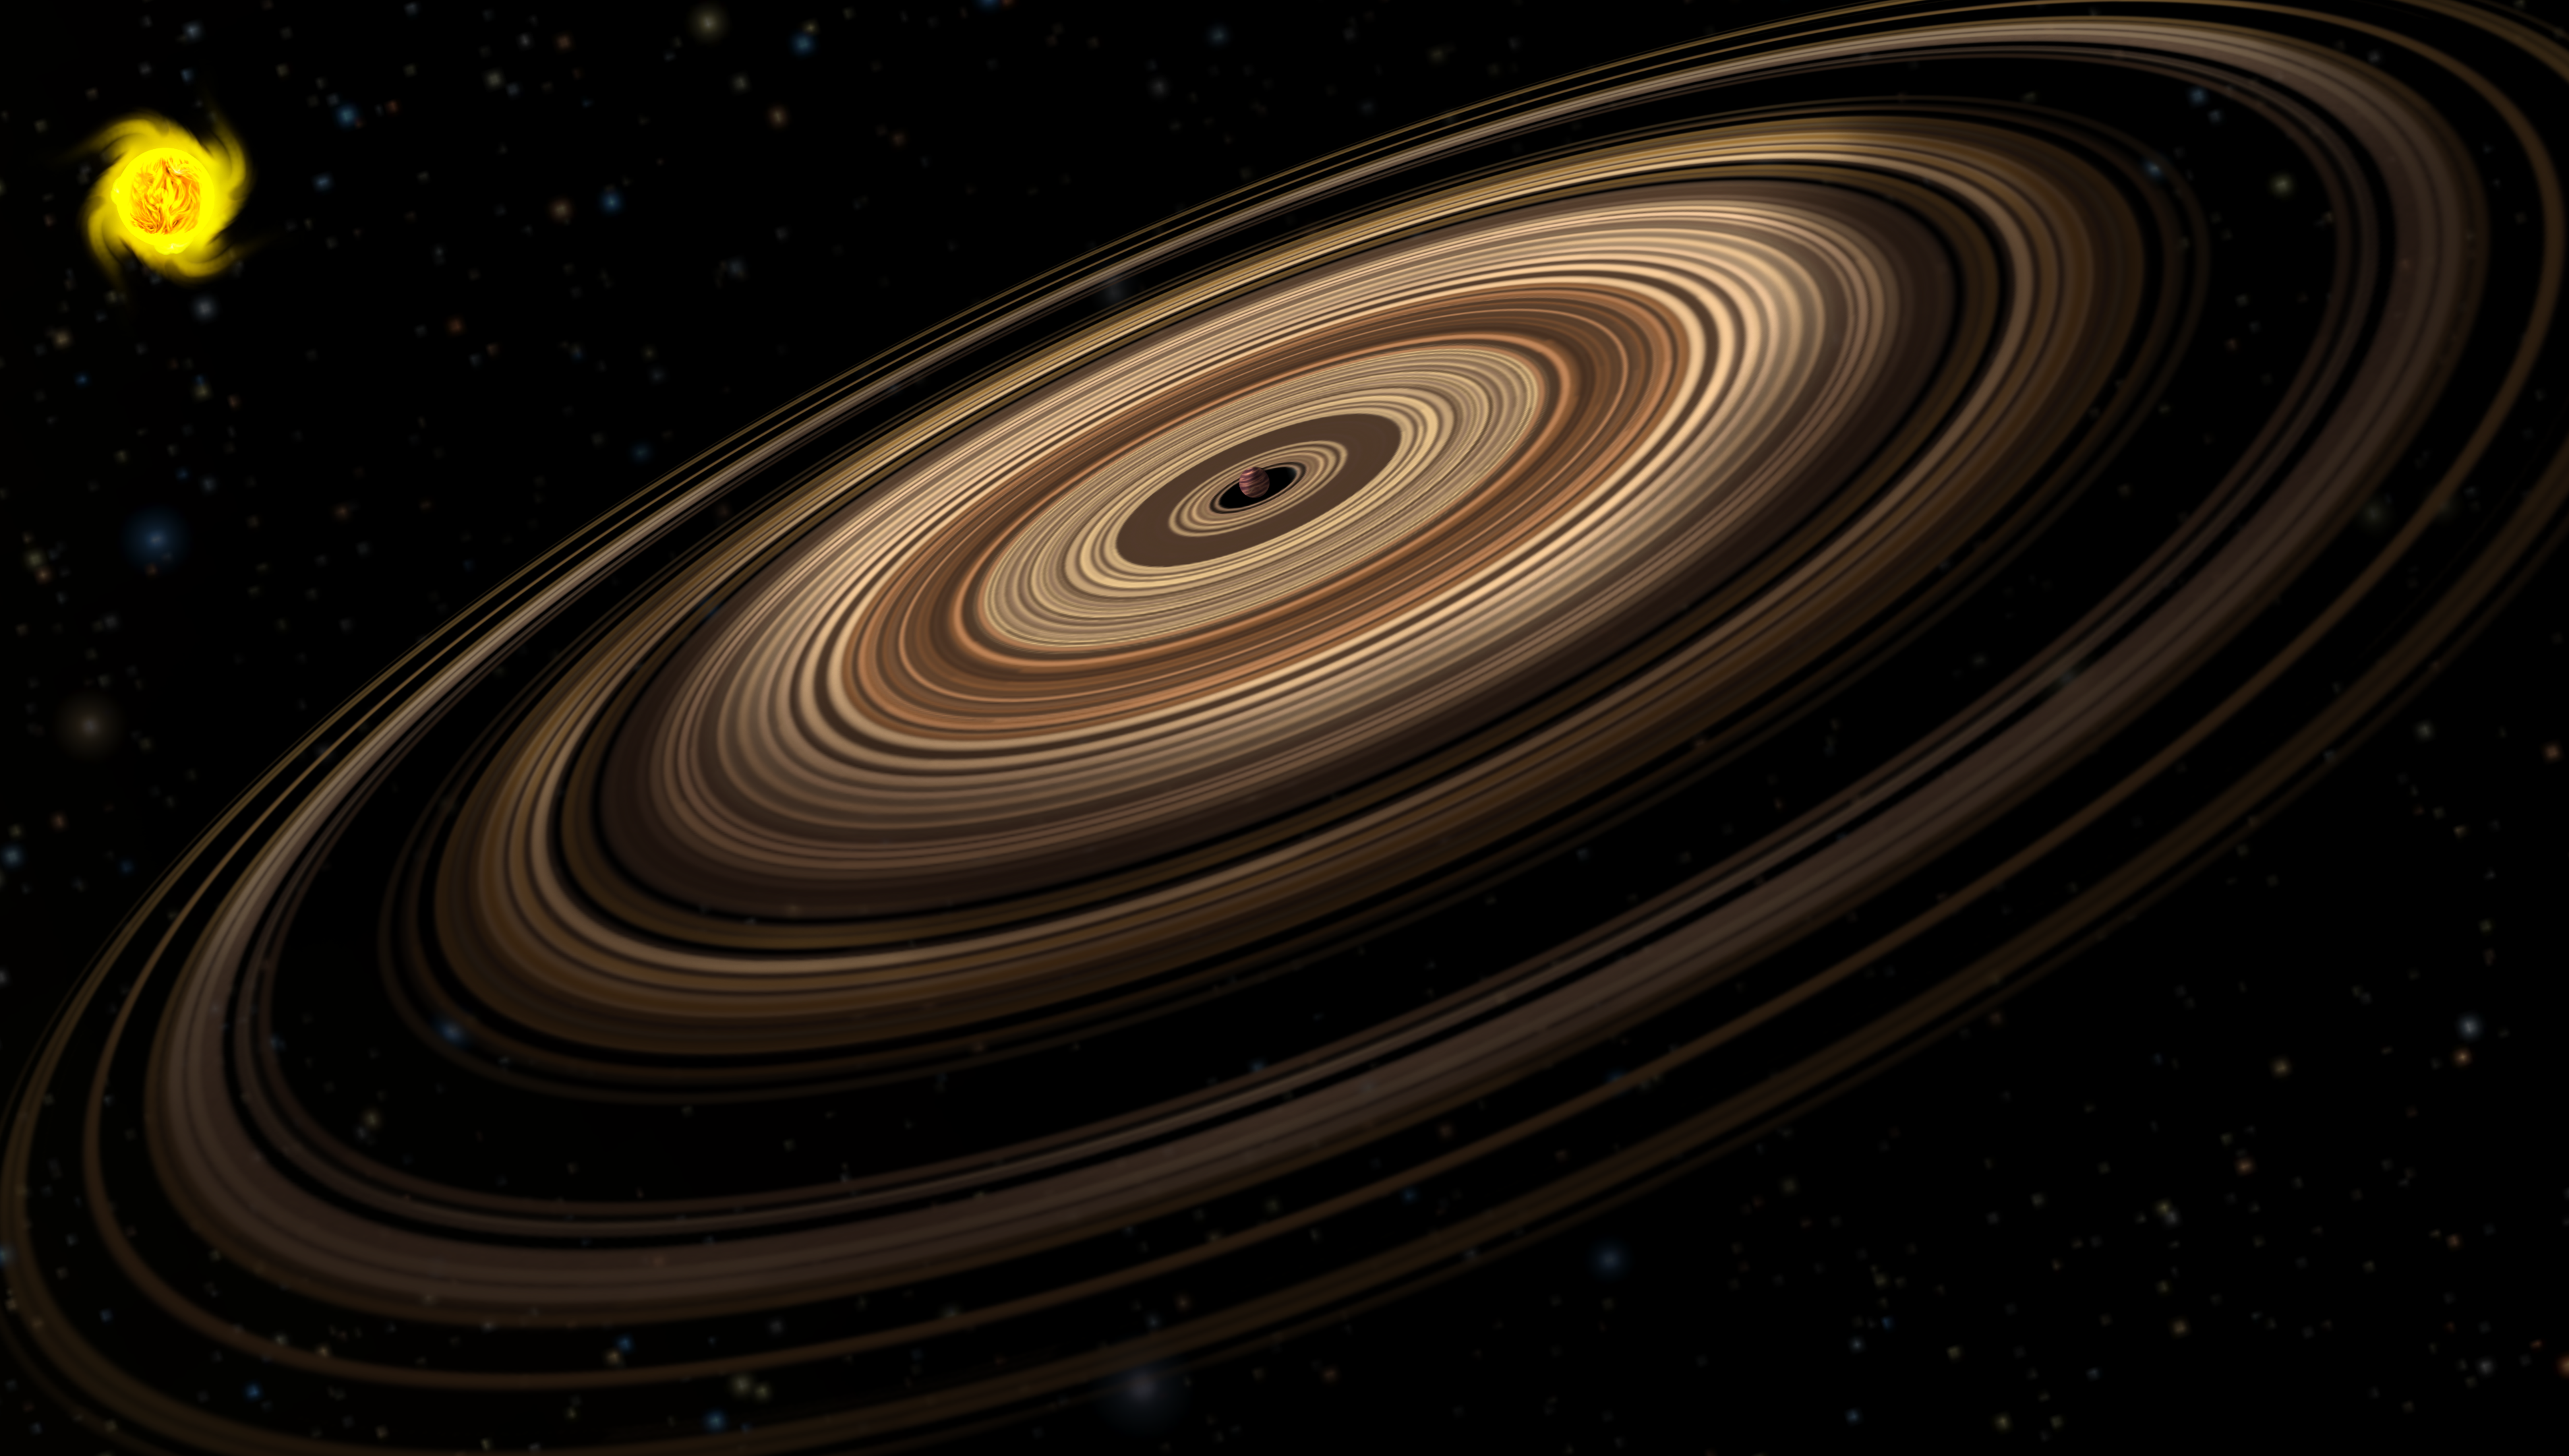 Super Saturn - J1407b (6/7/2021) by bruhitszoe on DeviantArt